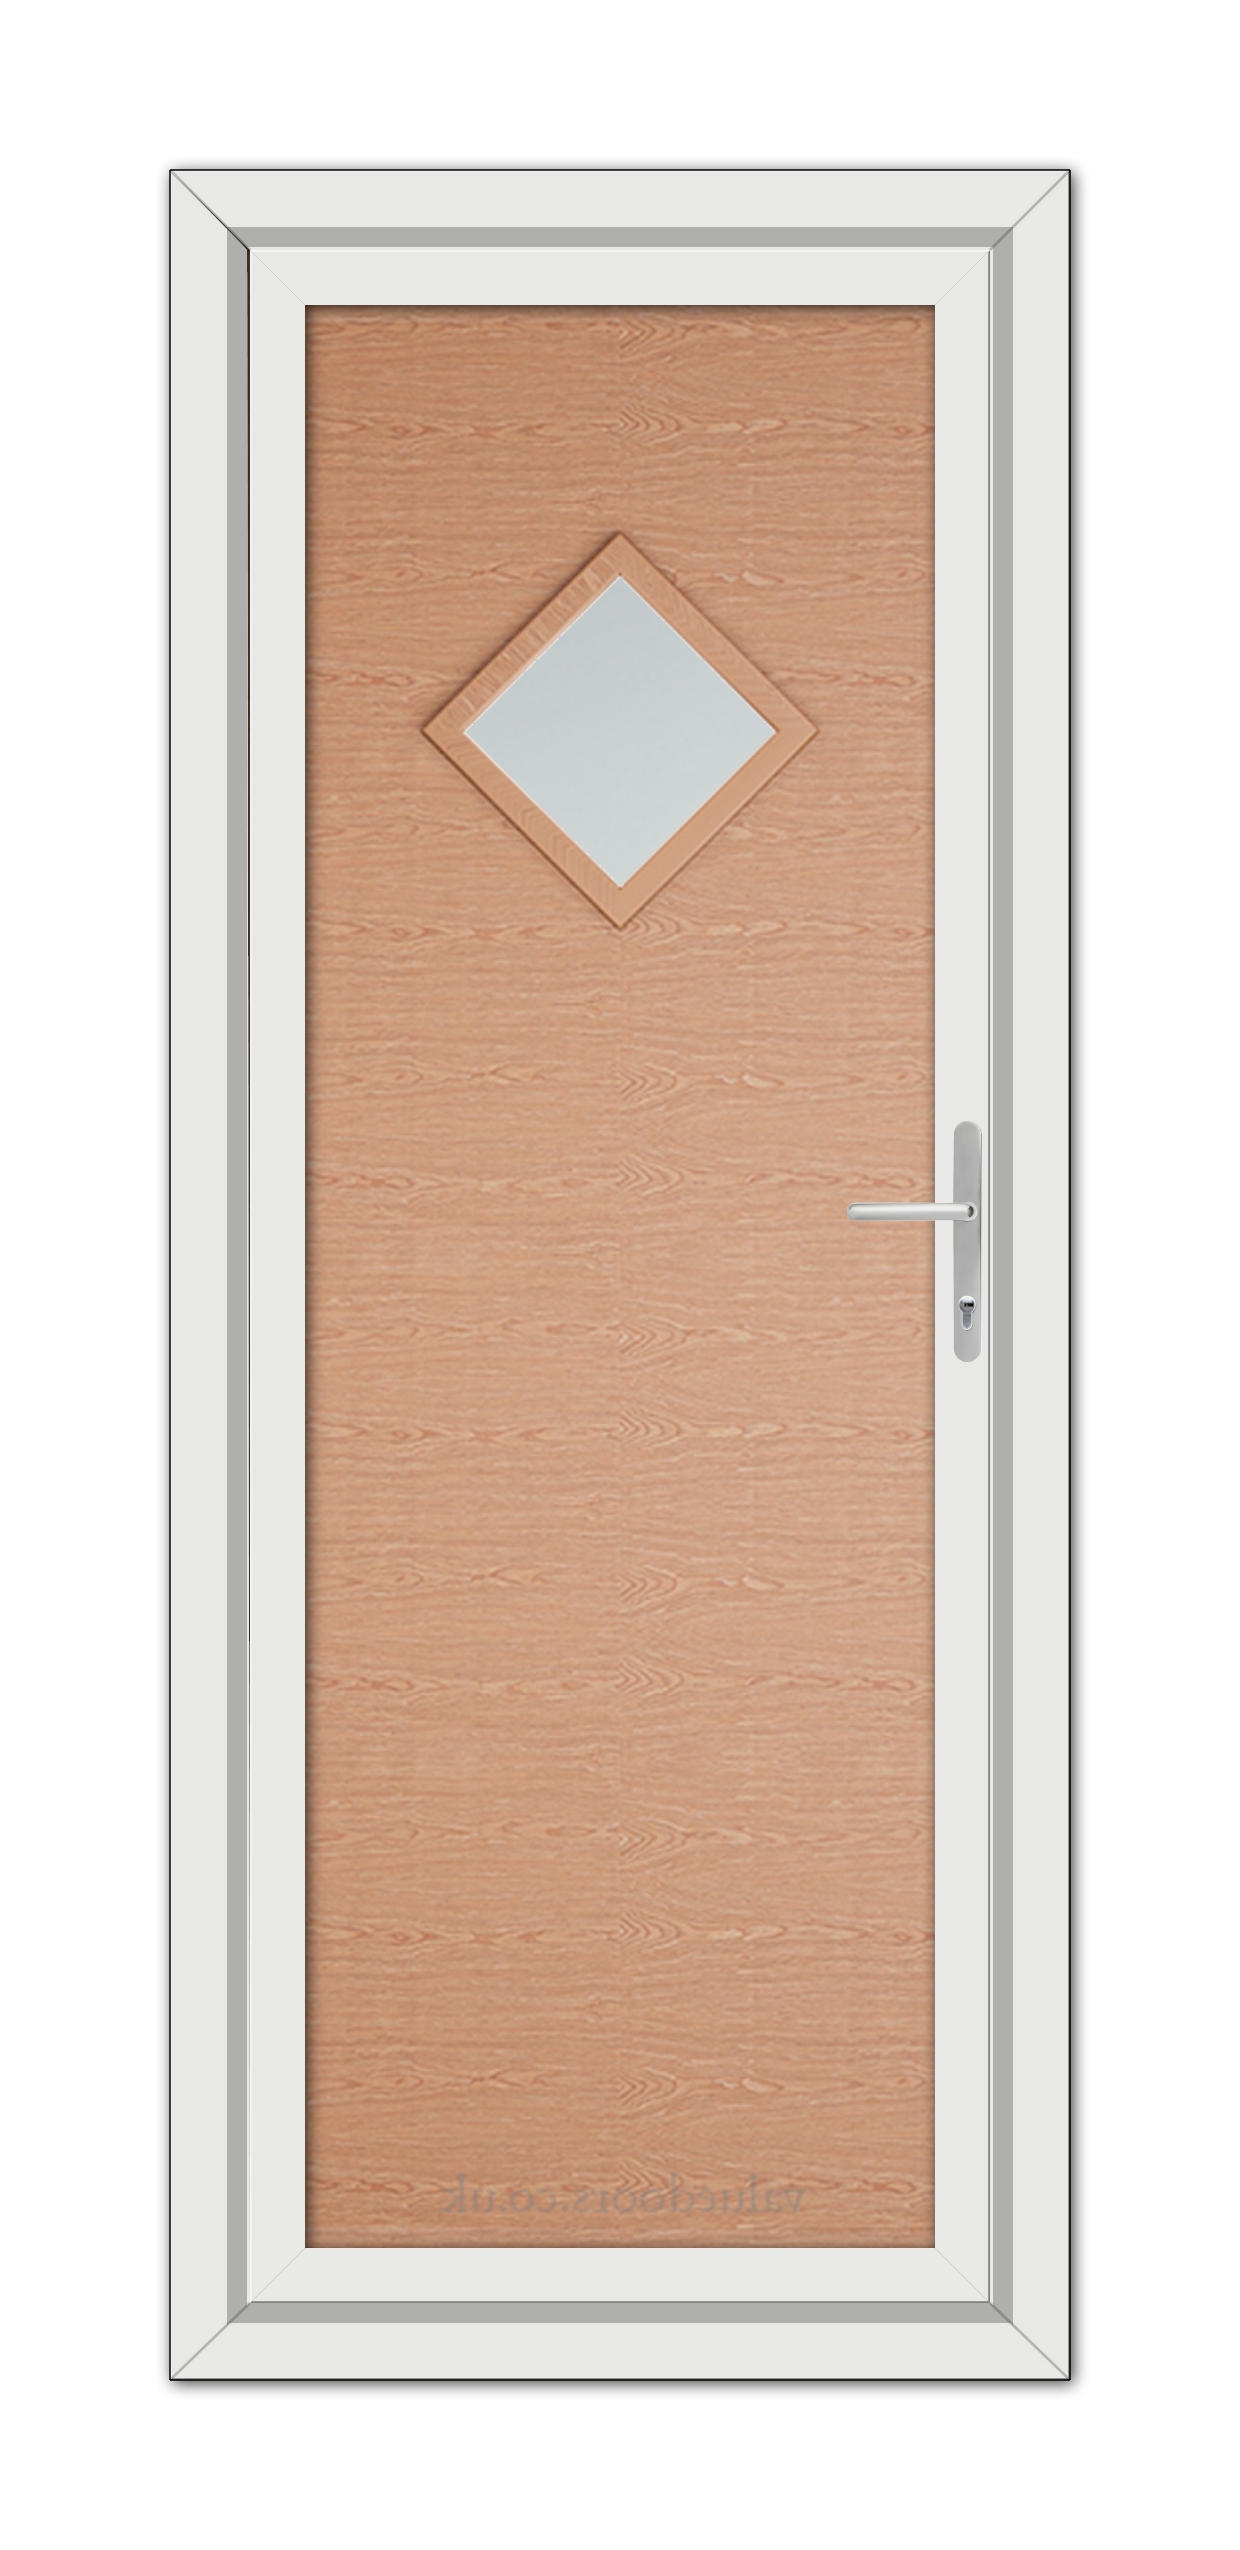 A Irish Oak Modern 5131 uPVC Door with a square on the door.